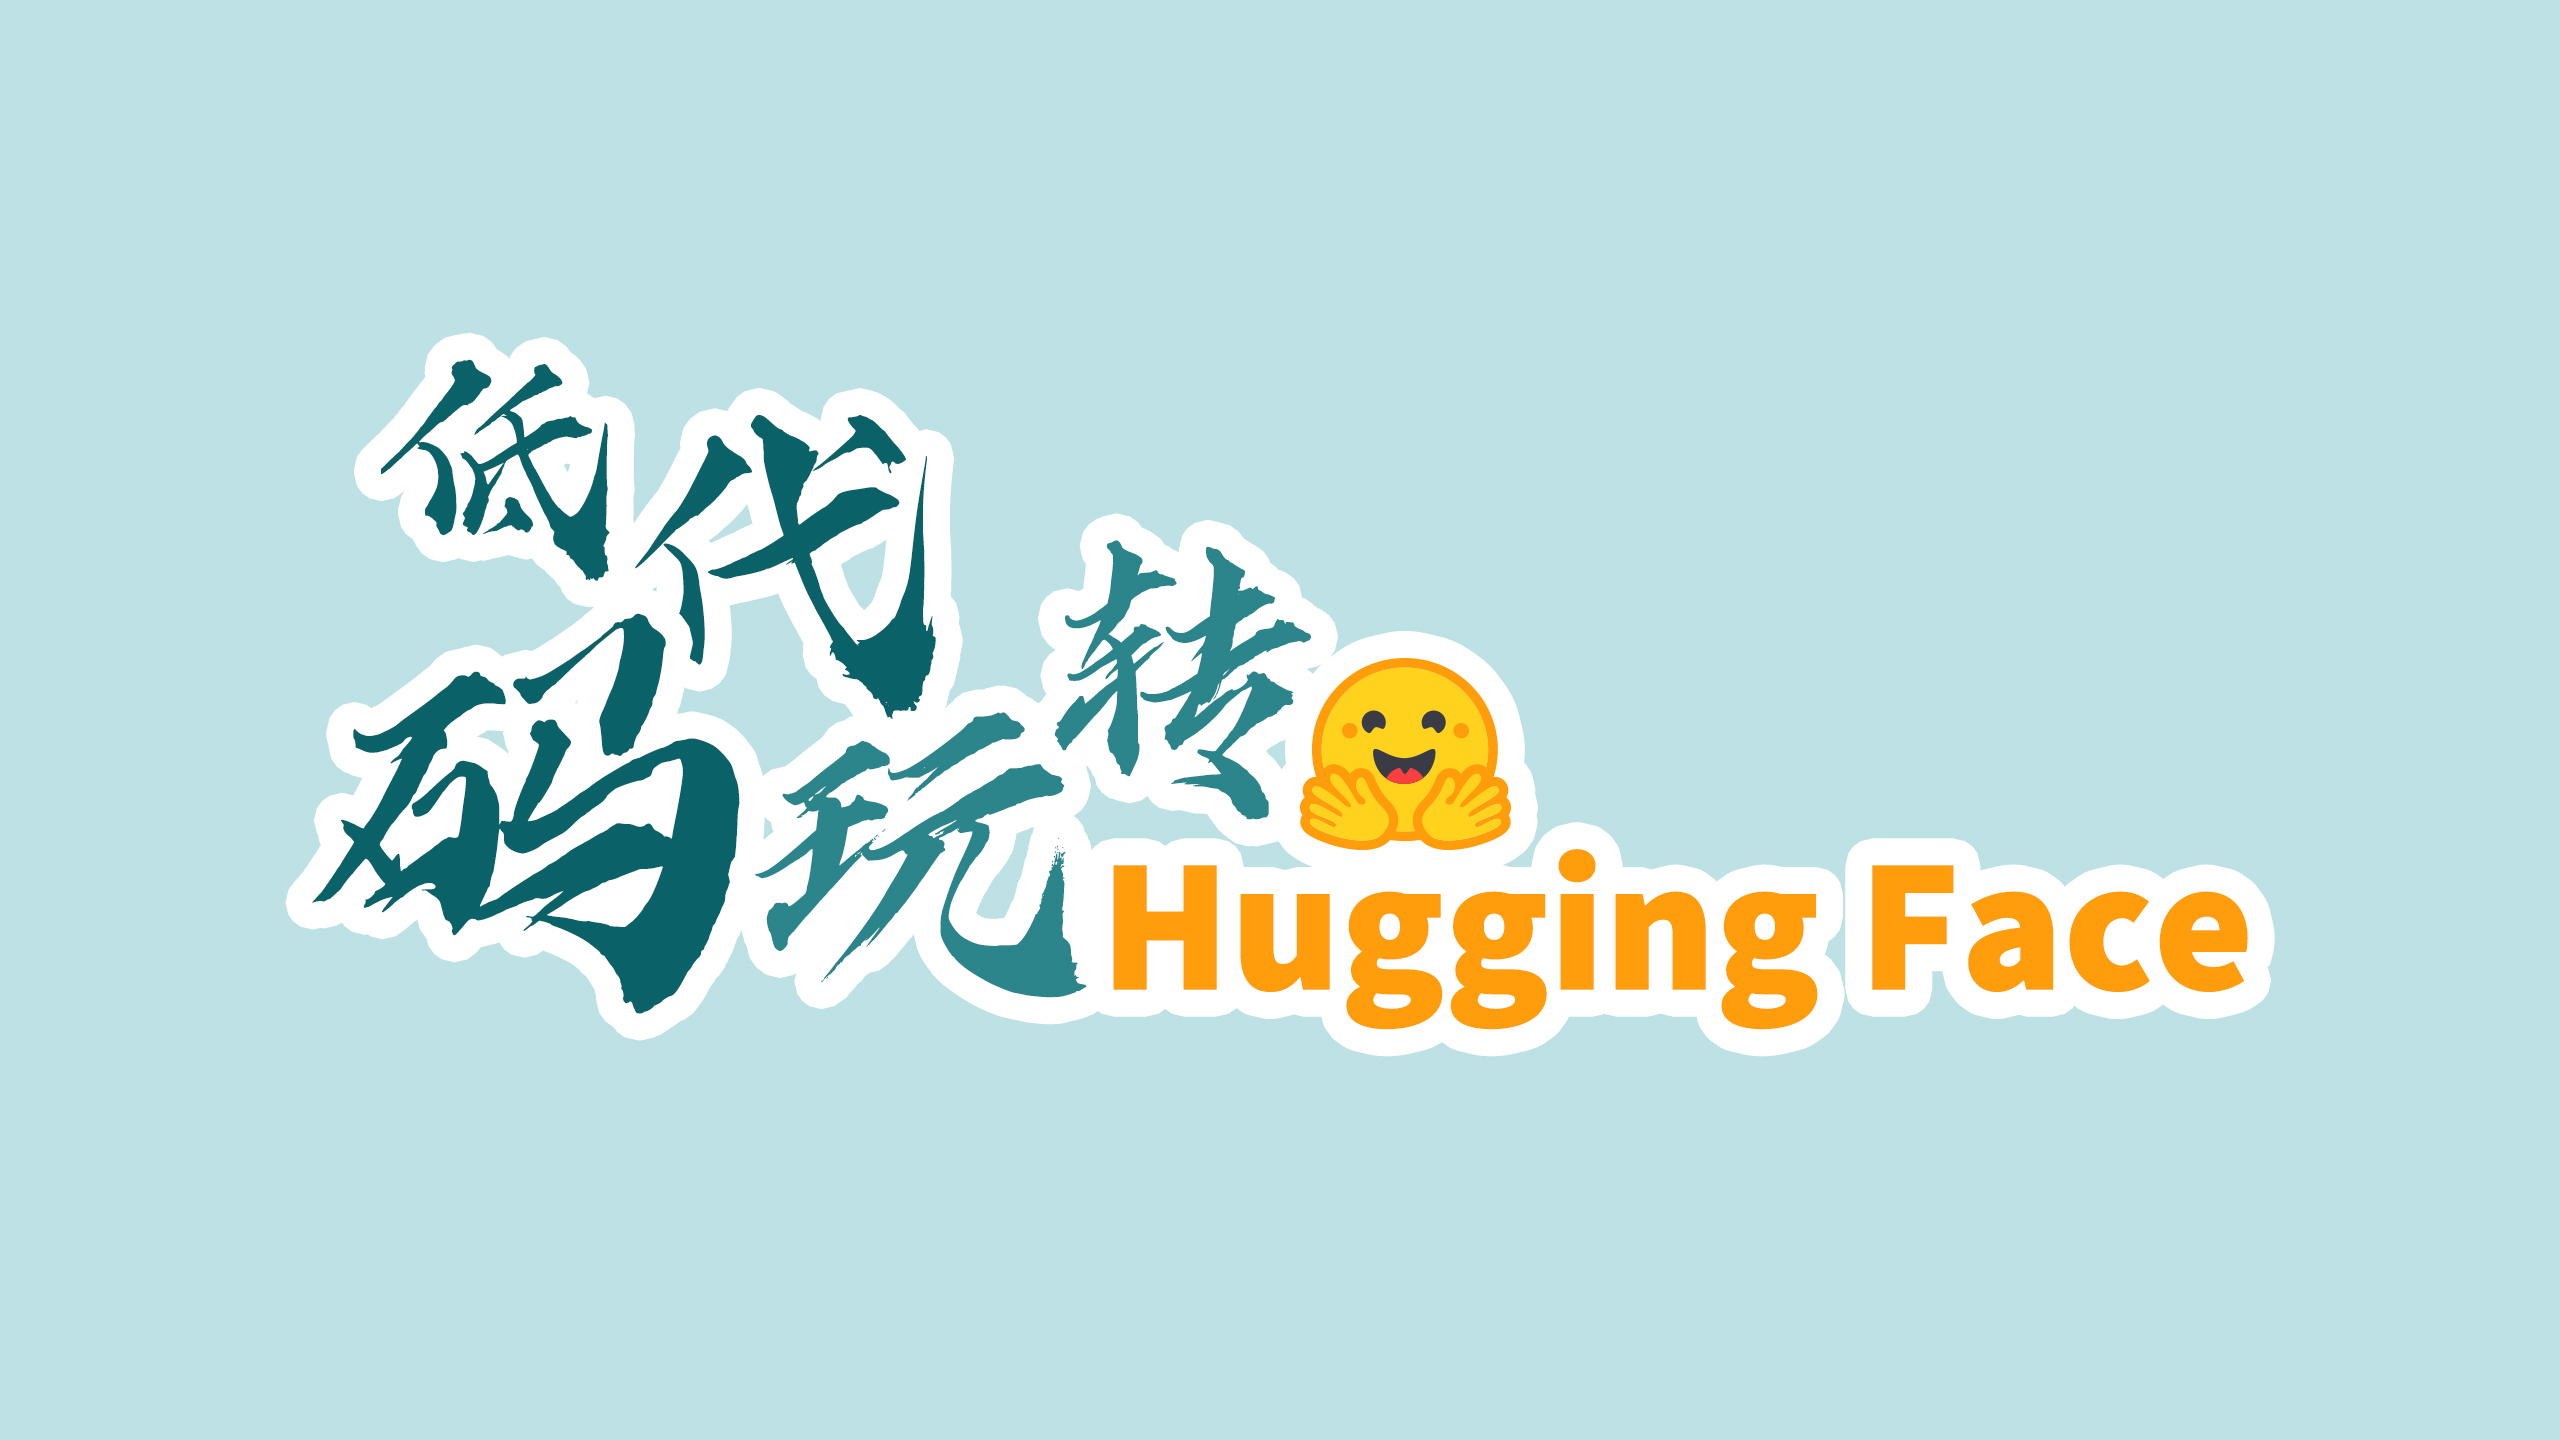 Hugging "Hugging Face"